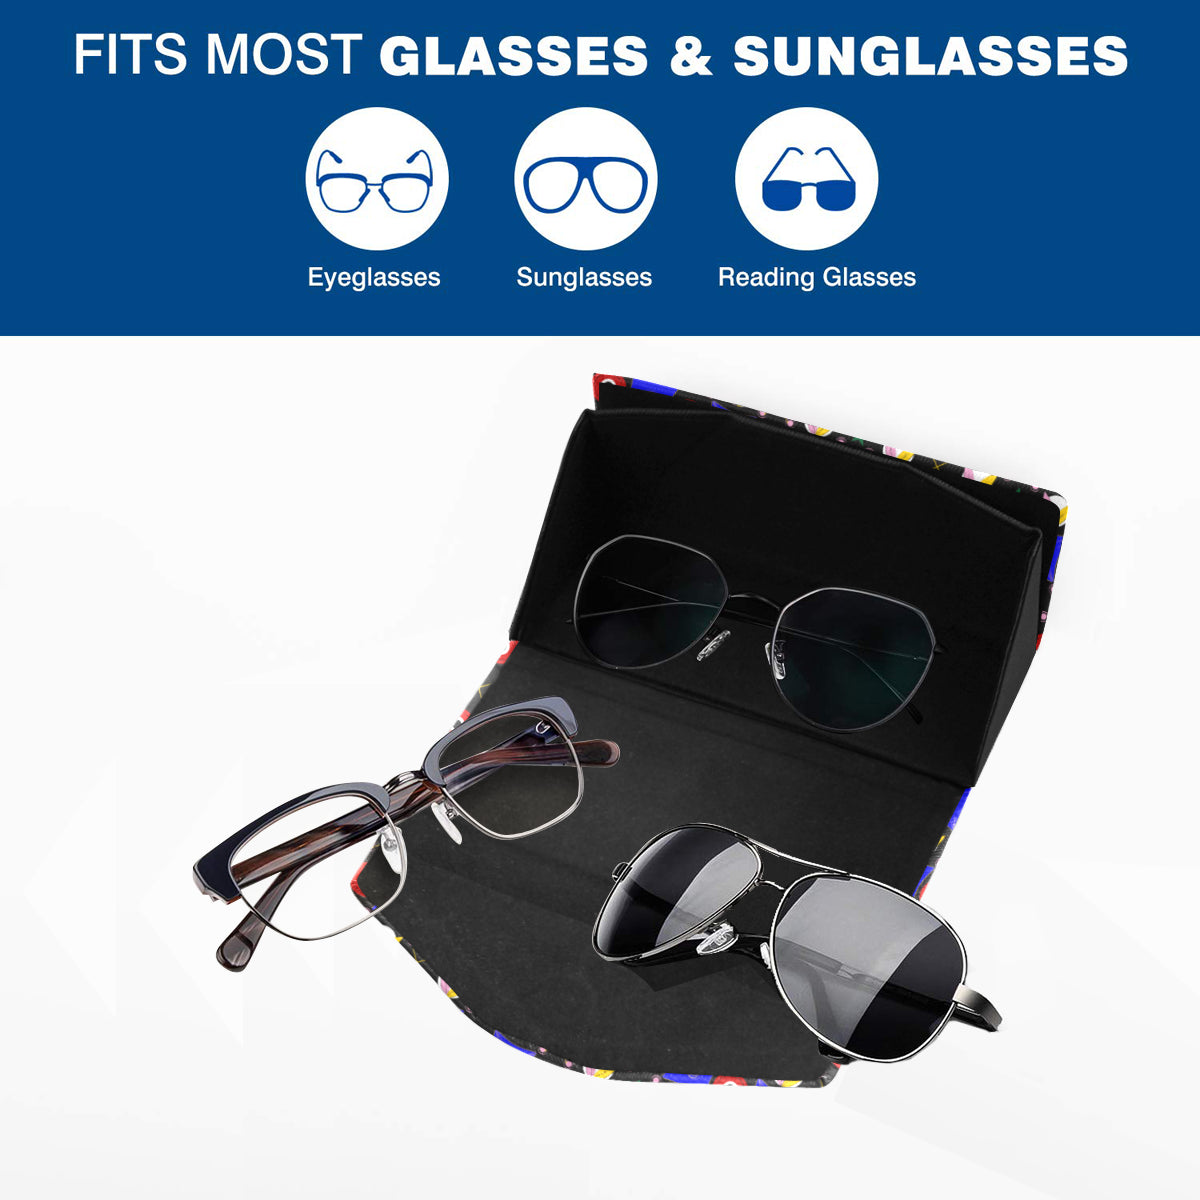 flyersetcinc Inception Print Foldable Glasses Case